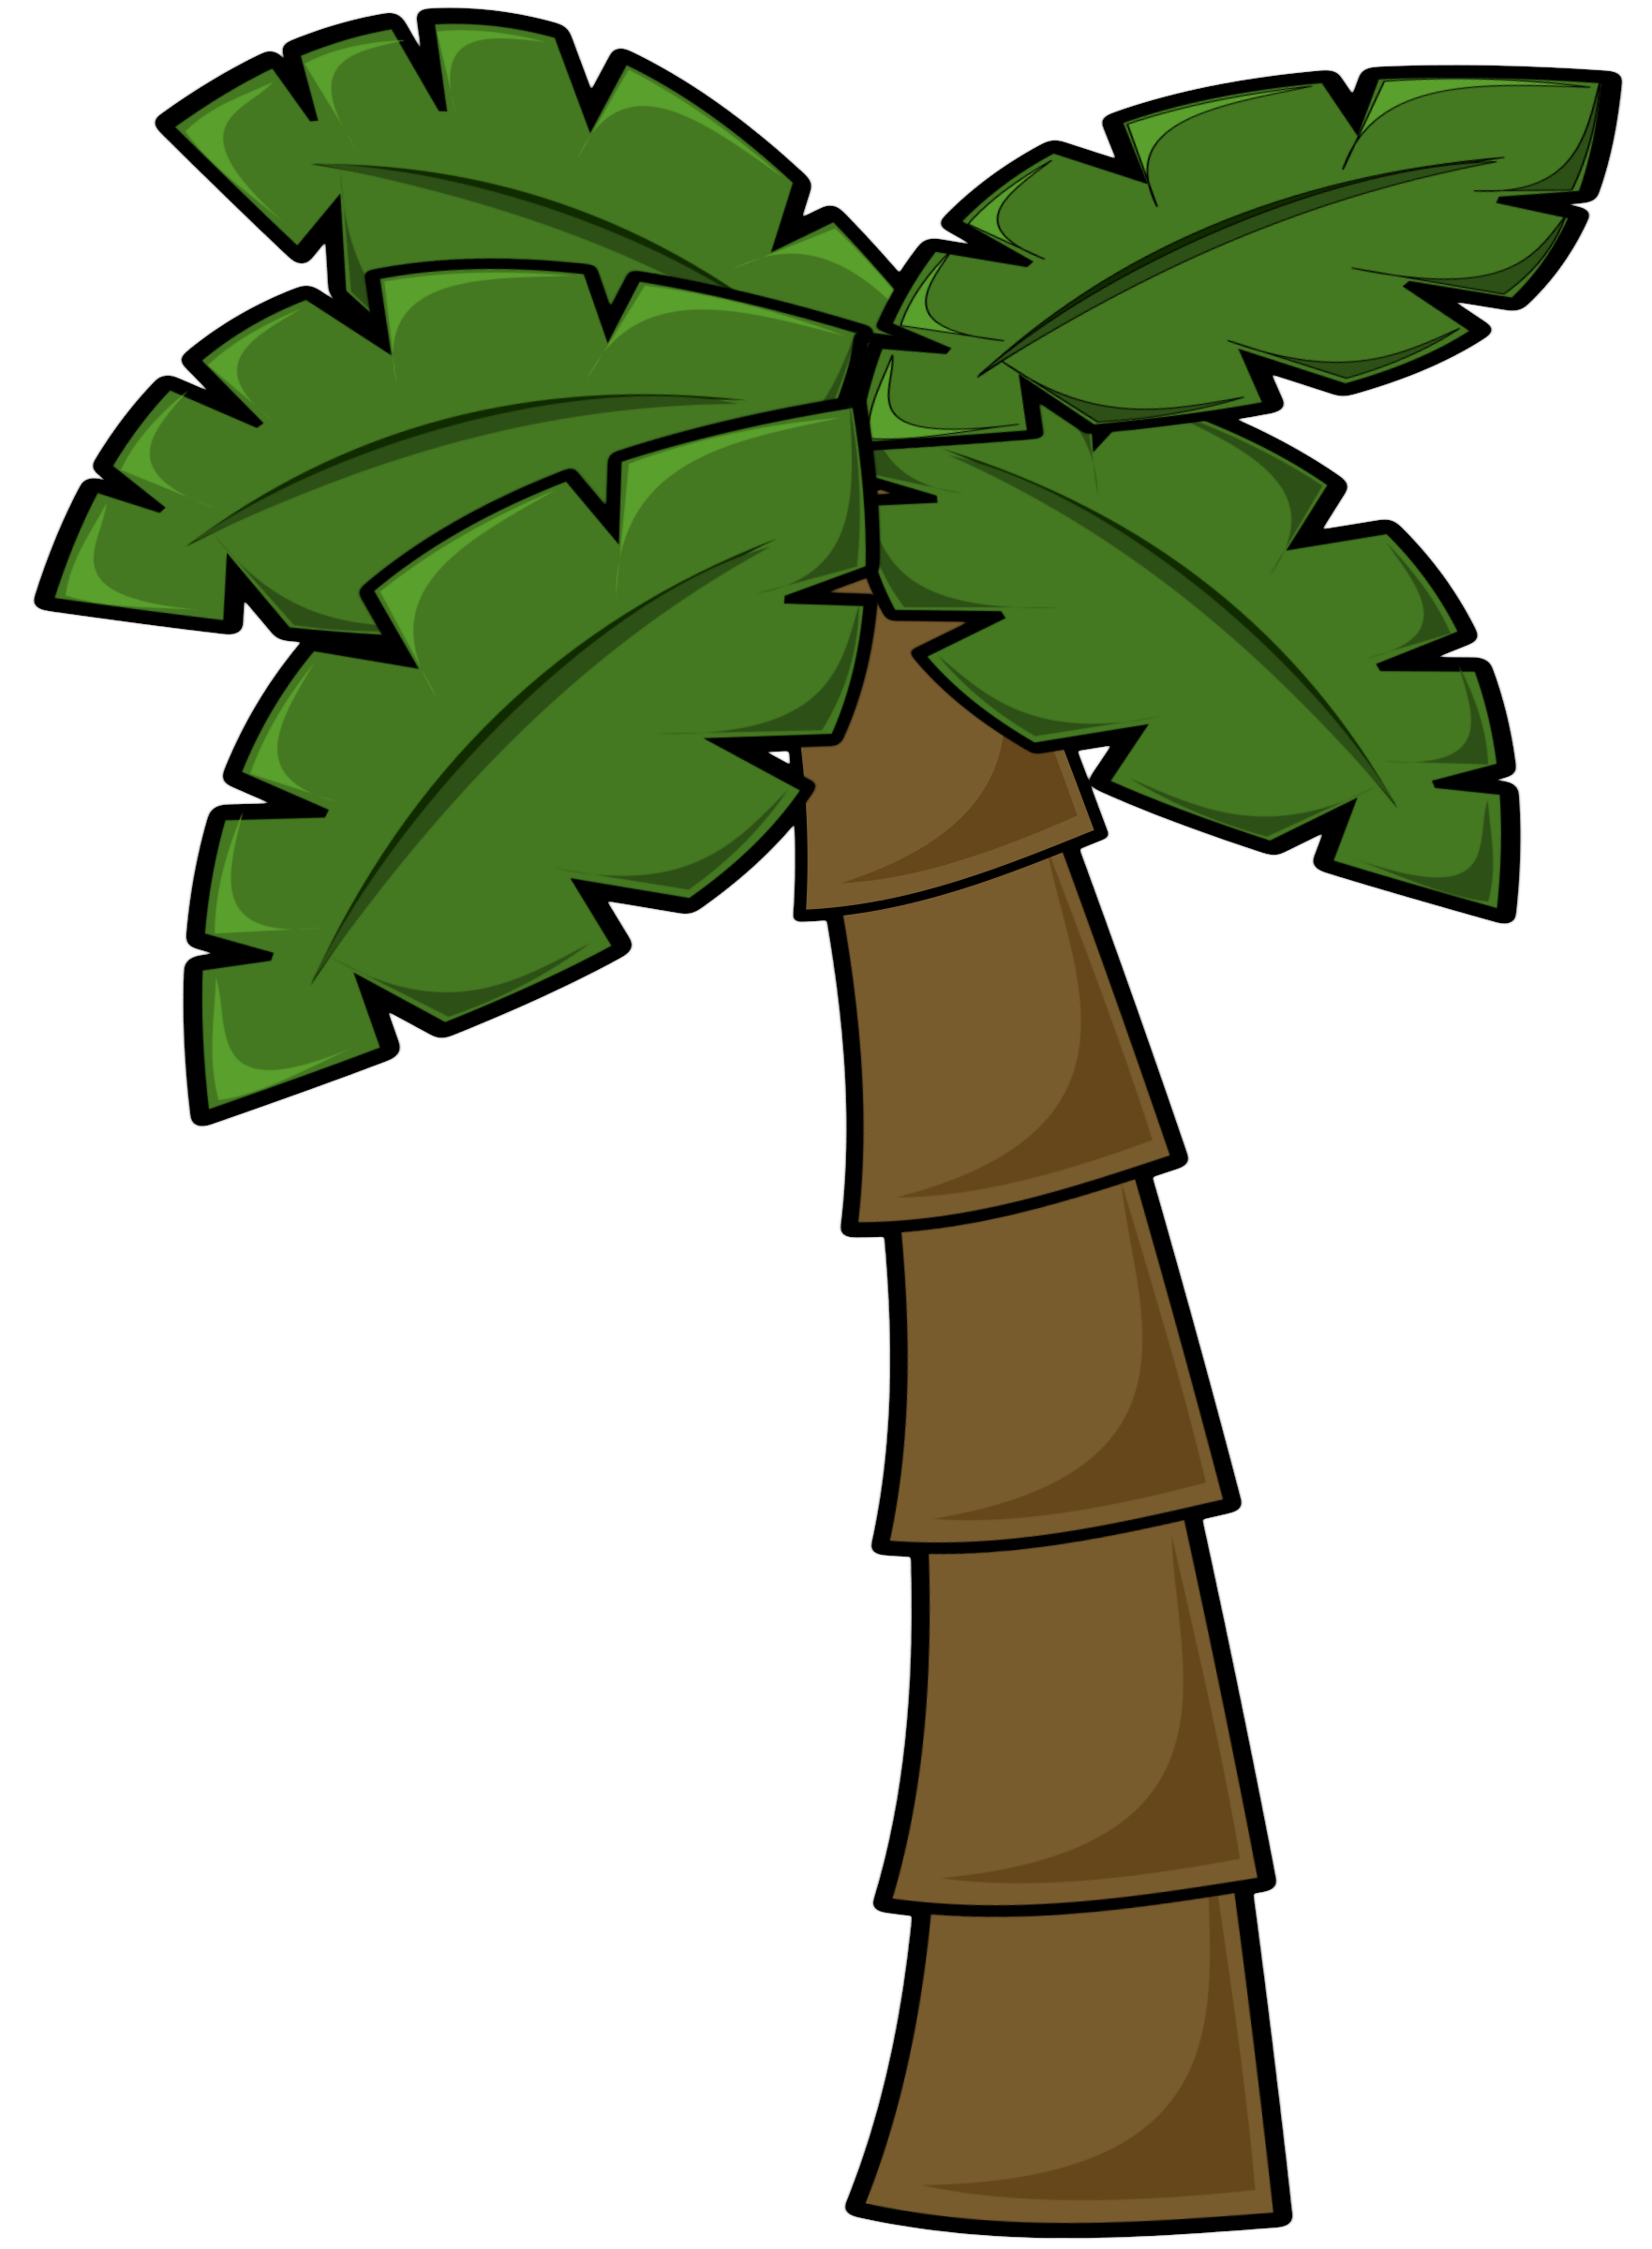 Palm tree clip art images